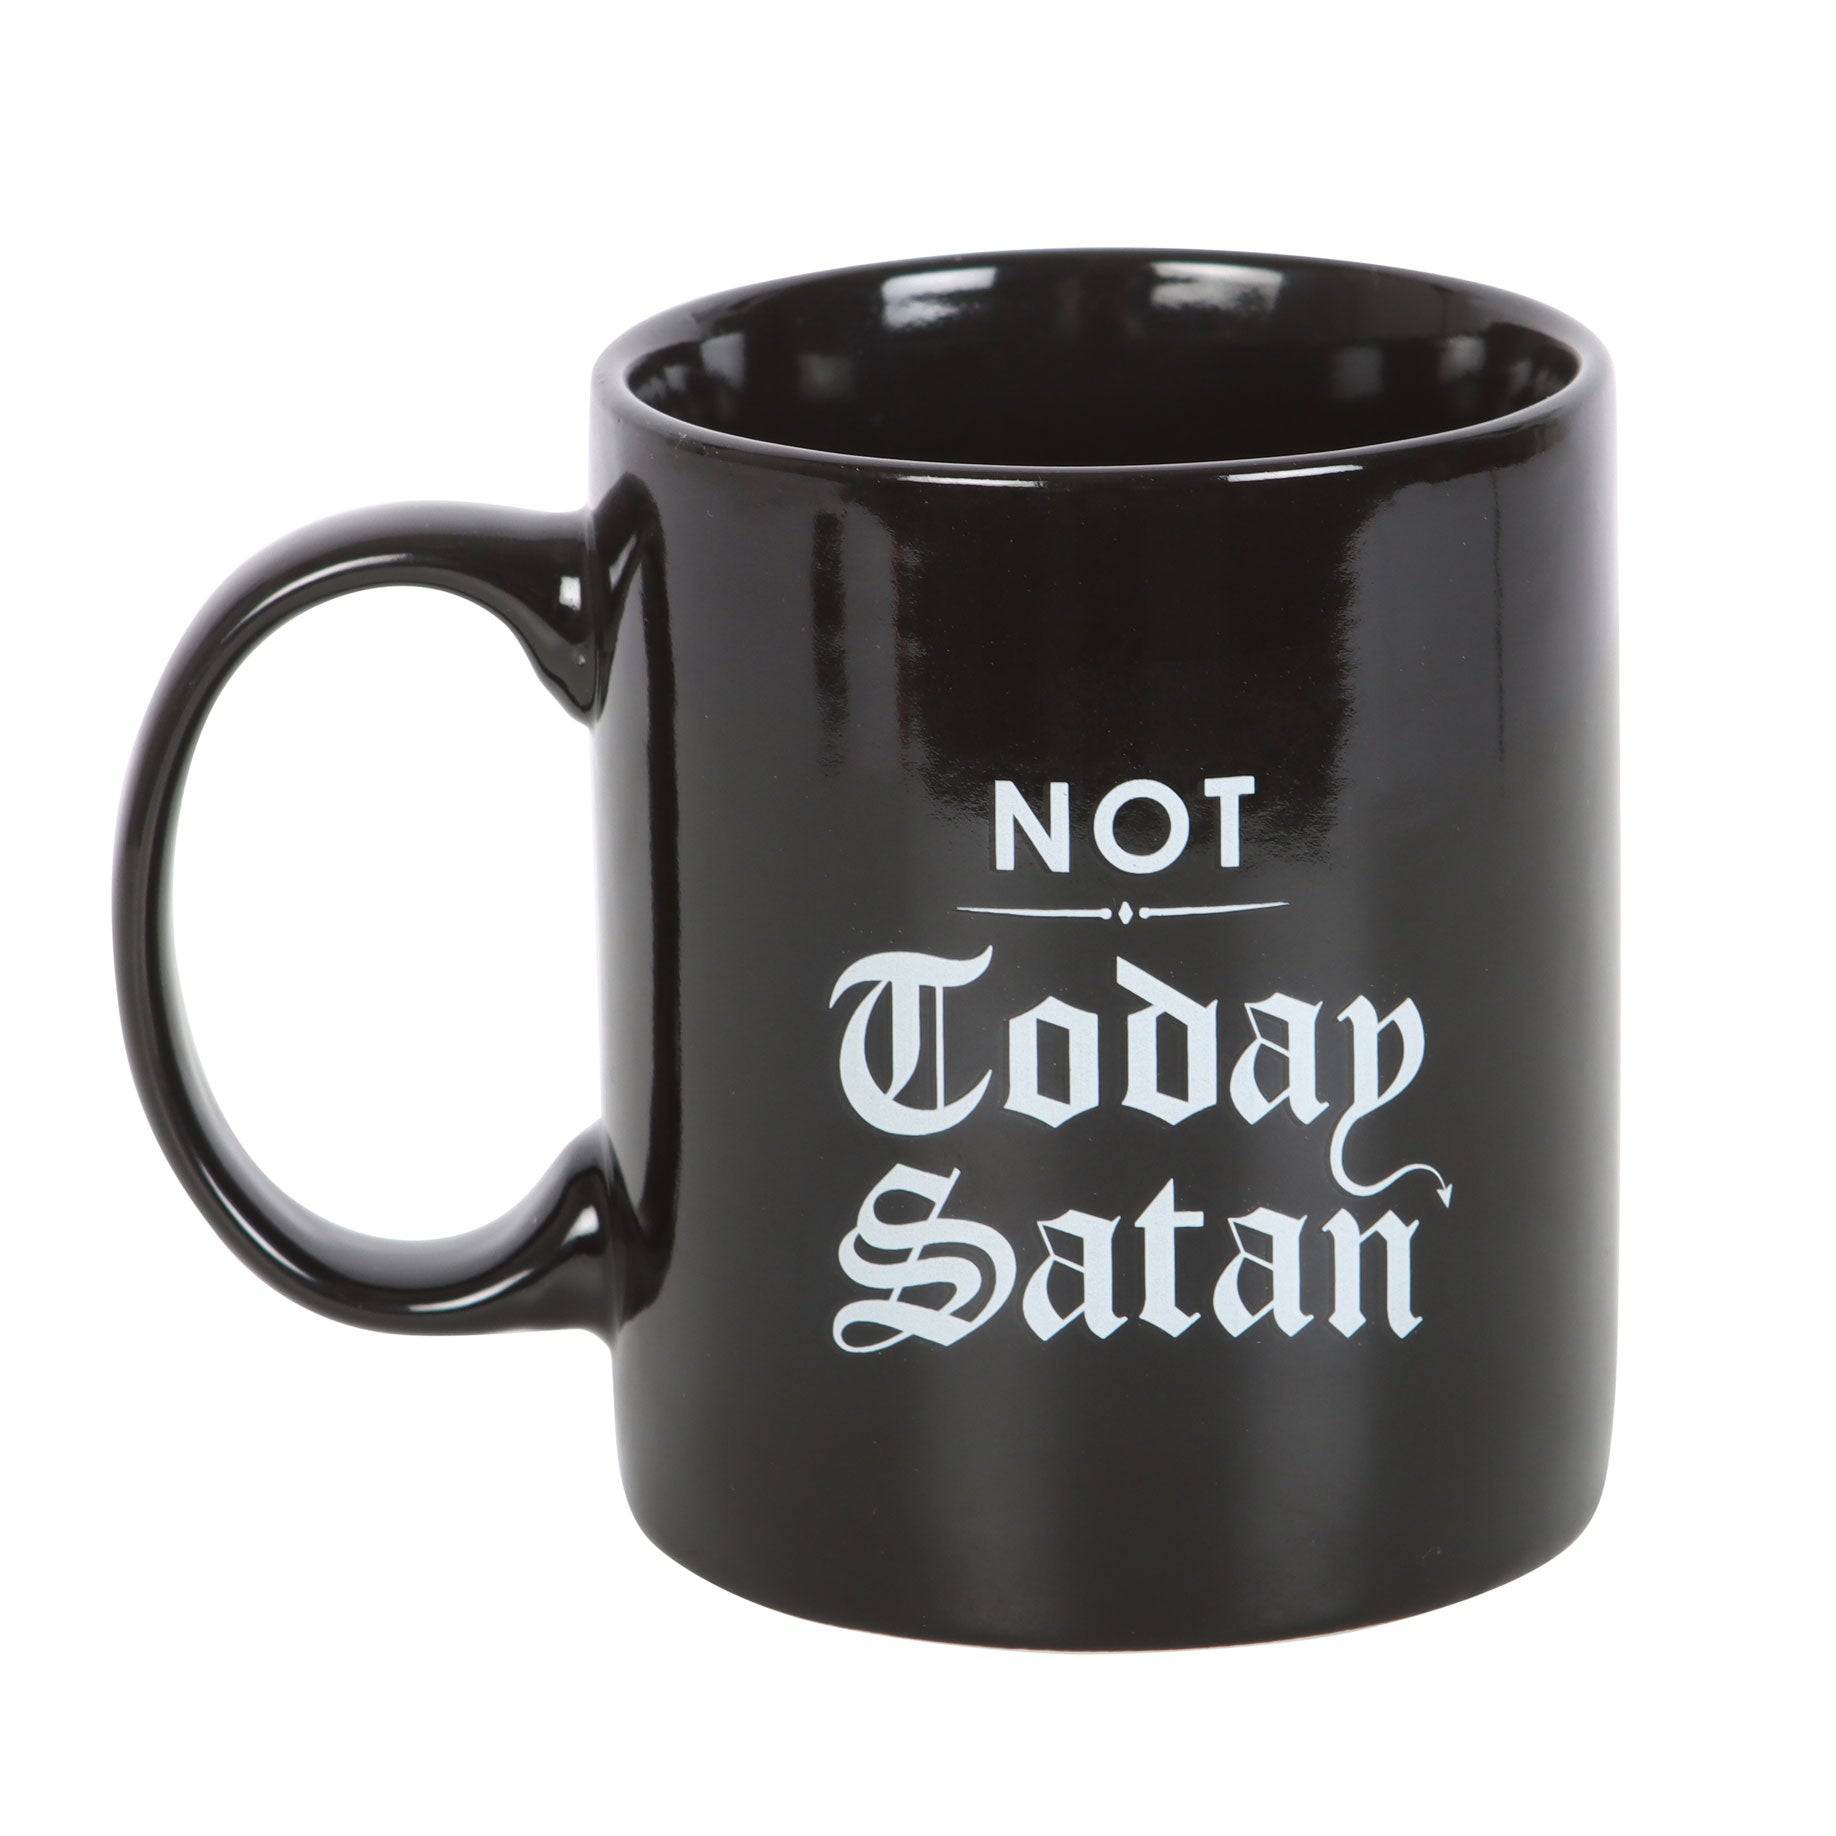 View Not Today Satan Mug information